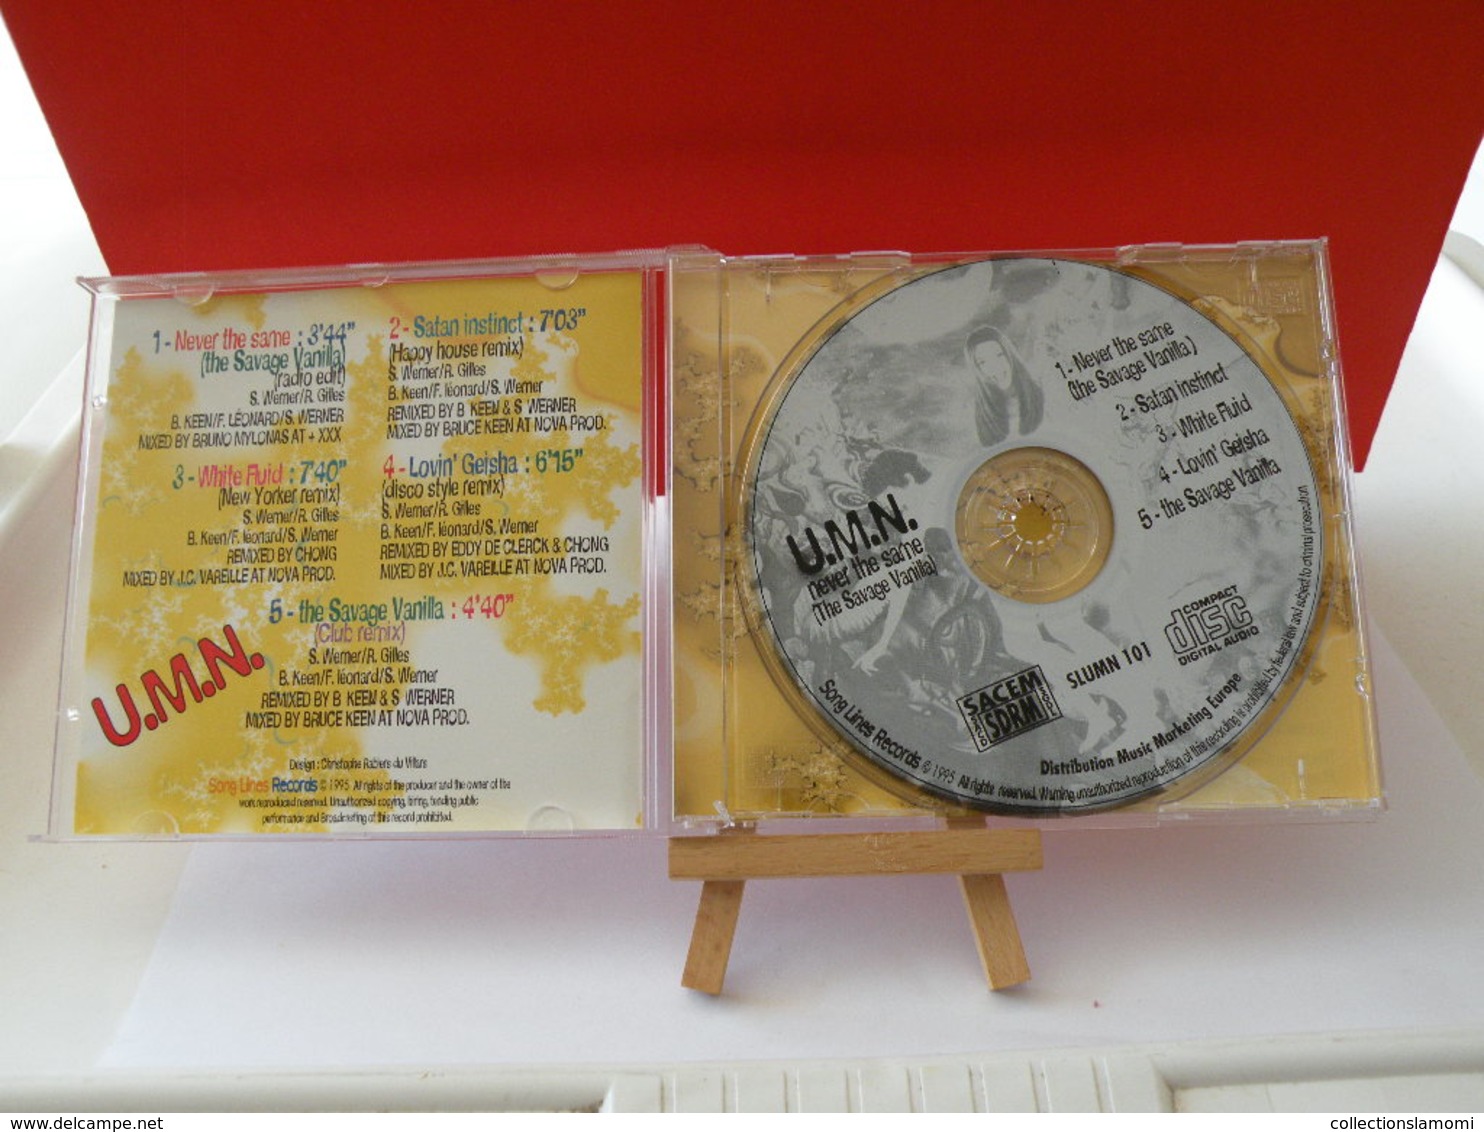 U.M.N. - (Titres Sur Photos) - CD 1995 - World Music